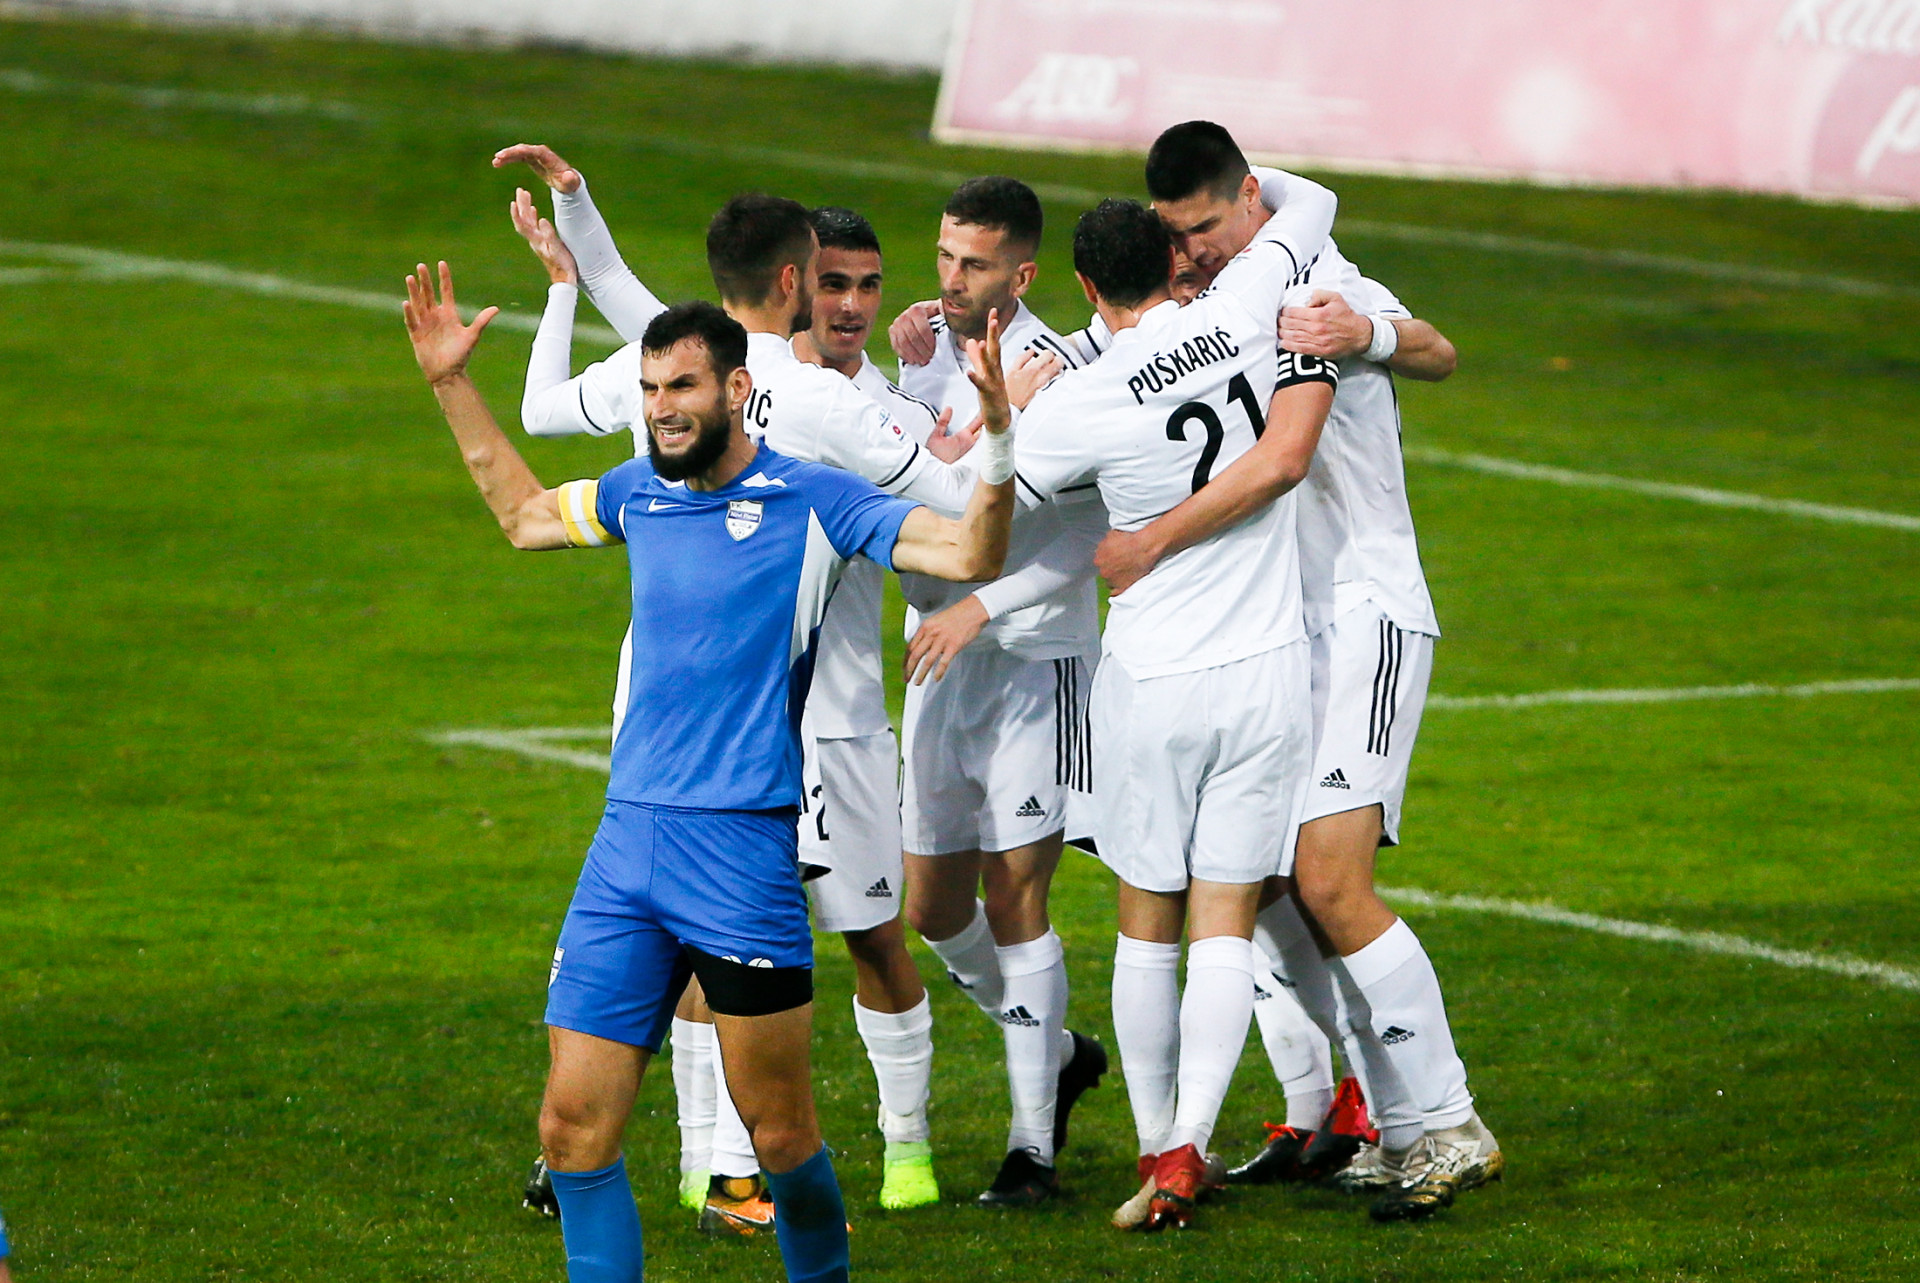 Čukarički – Novi Pazar 4:0 (1:0) - Asmir Kajević,Darko Puškarić,Milutin Vidosavljević,Stefan Šapić,Srđan Mijailović | FkCukaricki